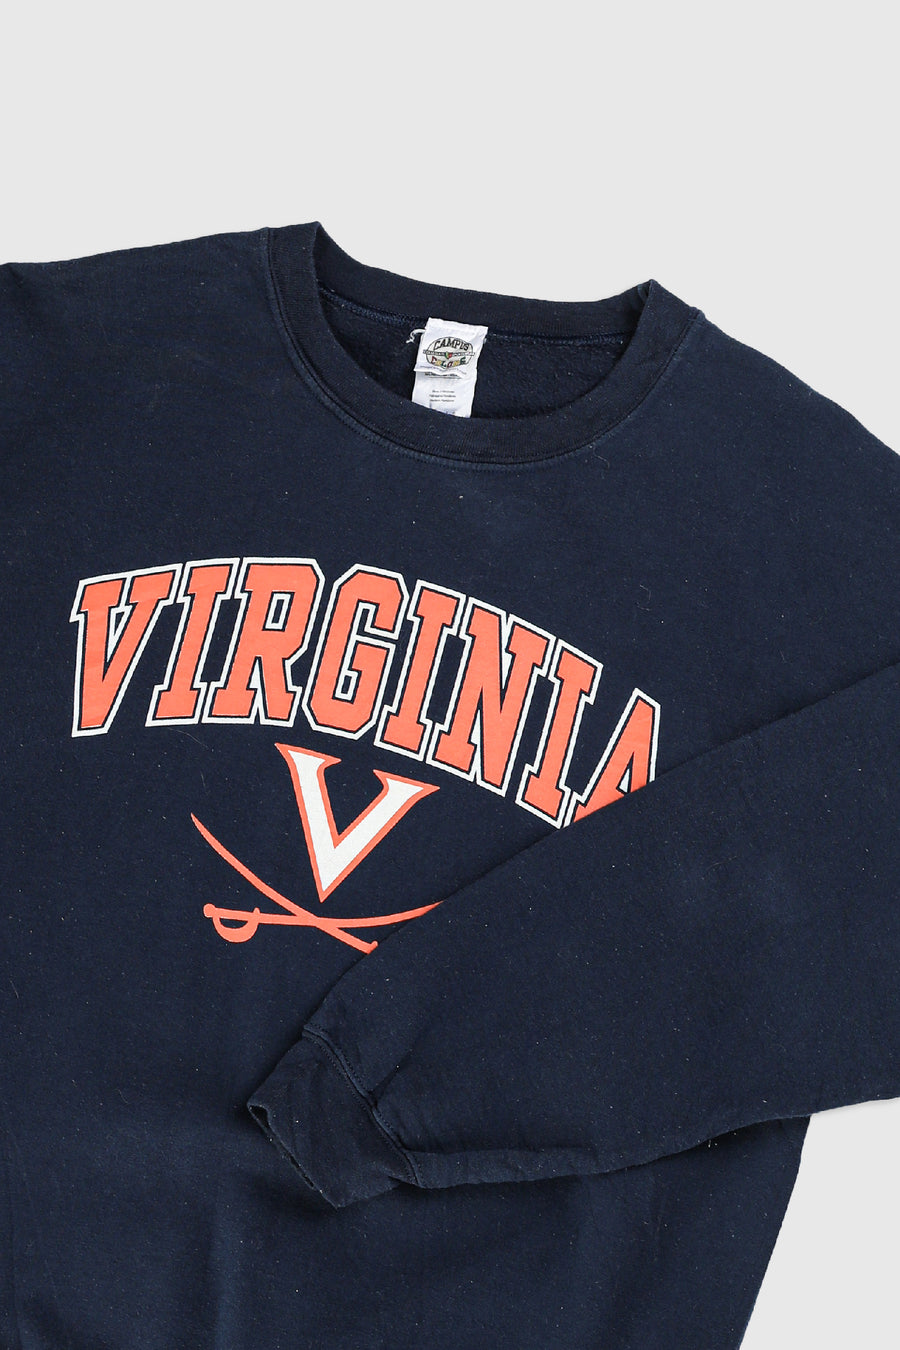 Vintage Virginia Sweatshirt